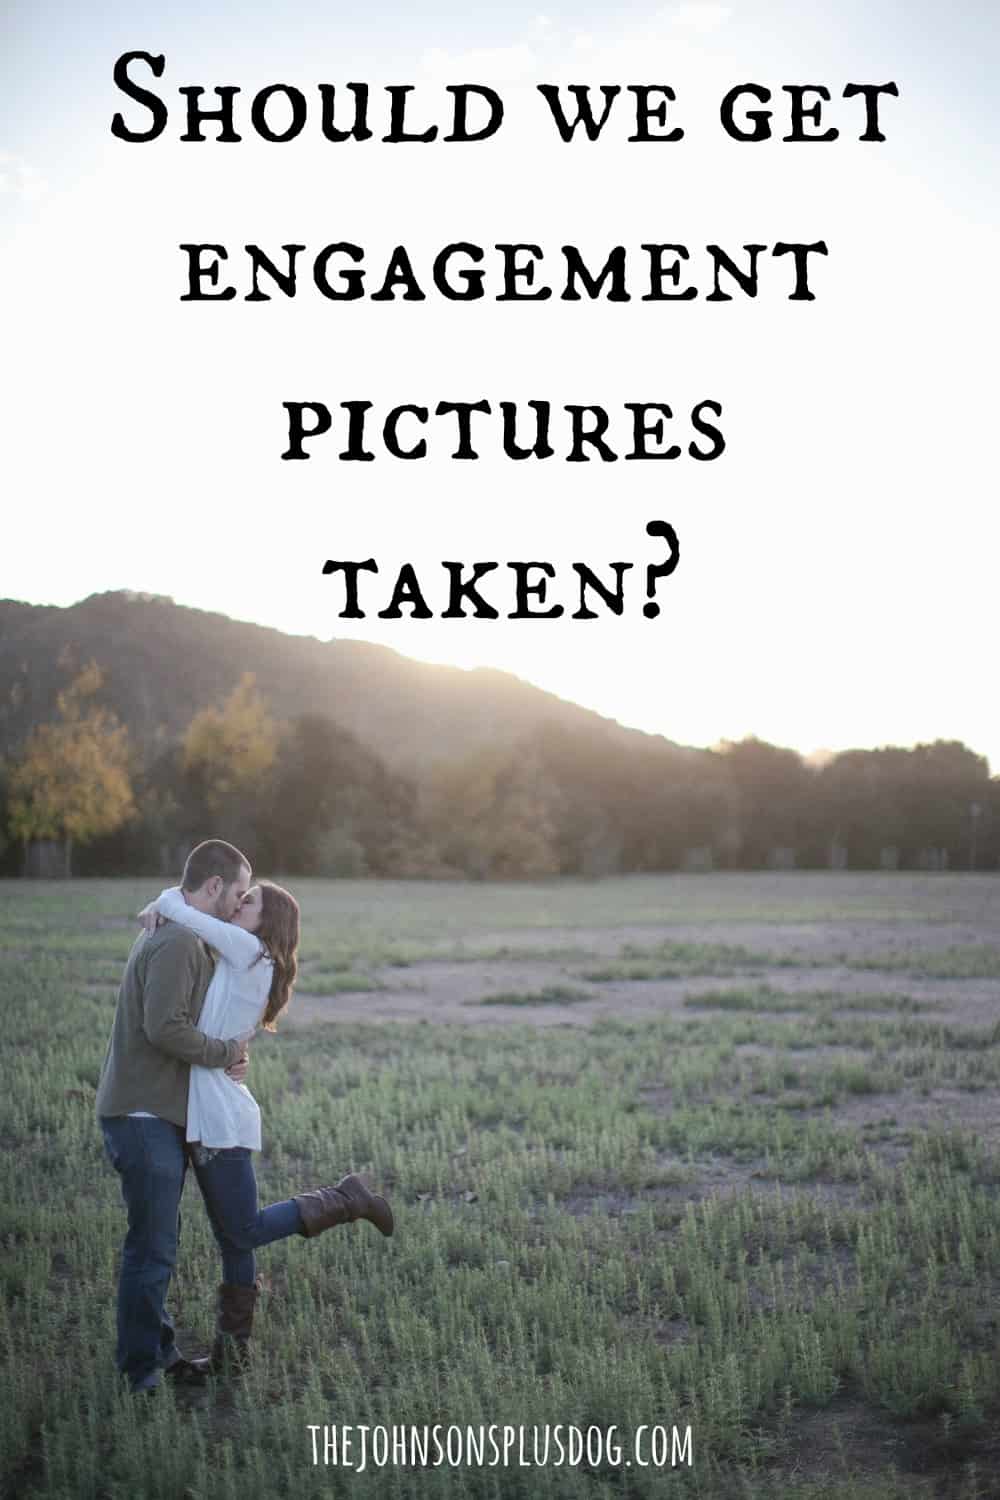 Should we get engagement pictures taken?